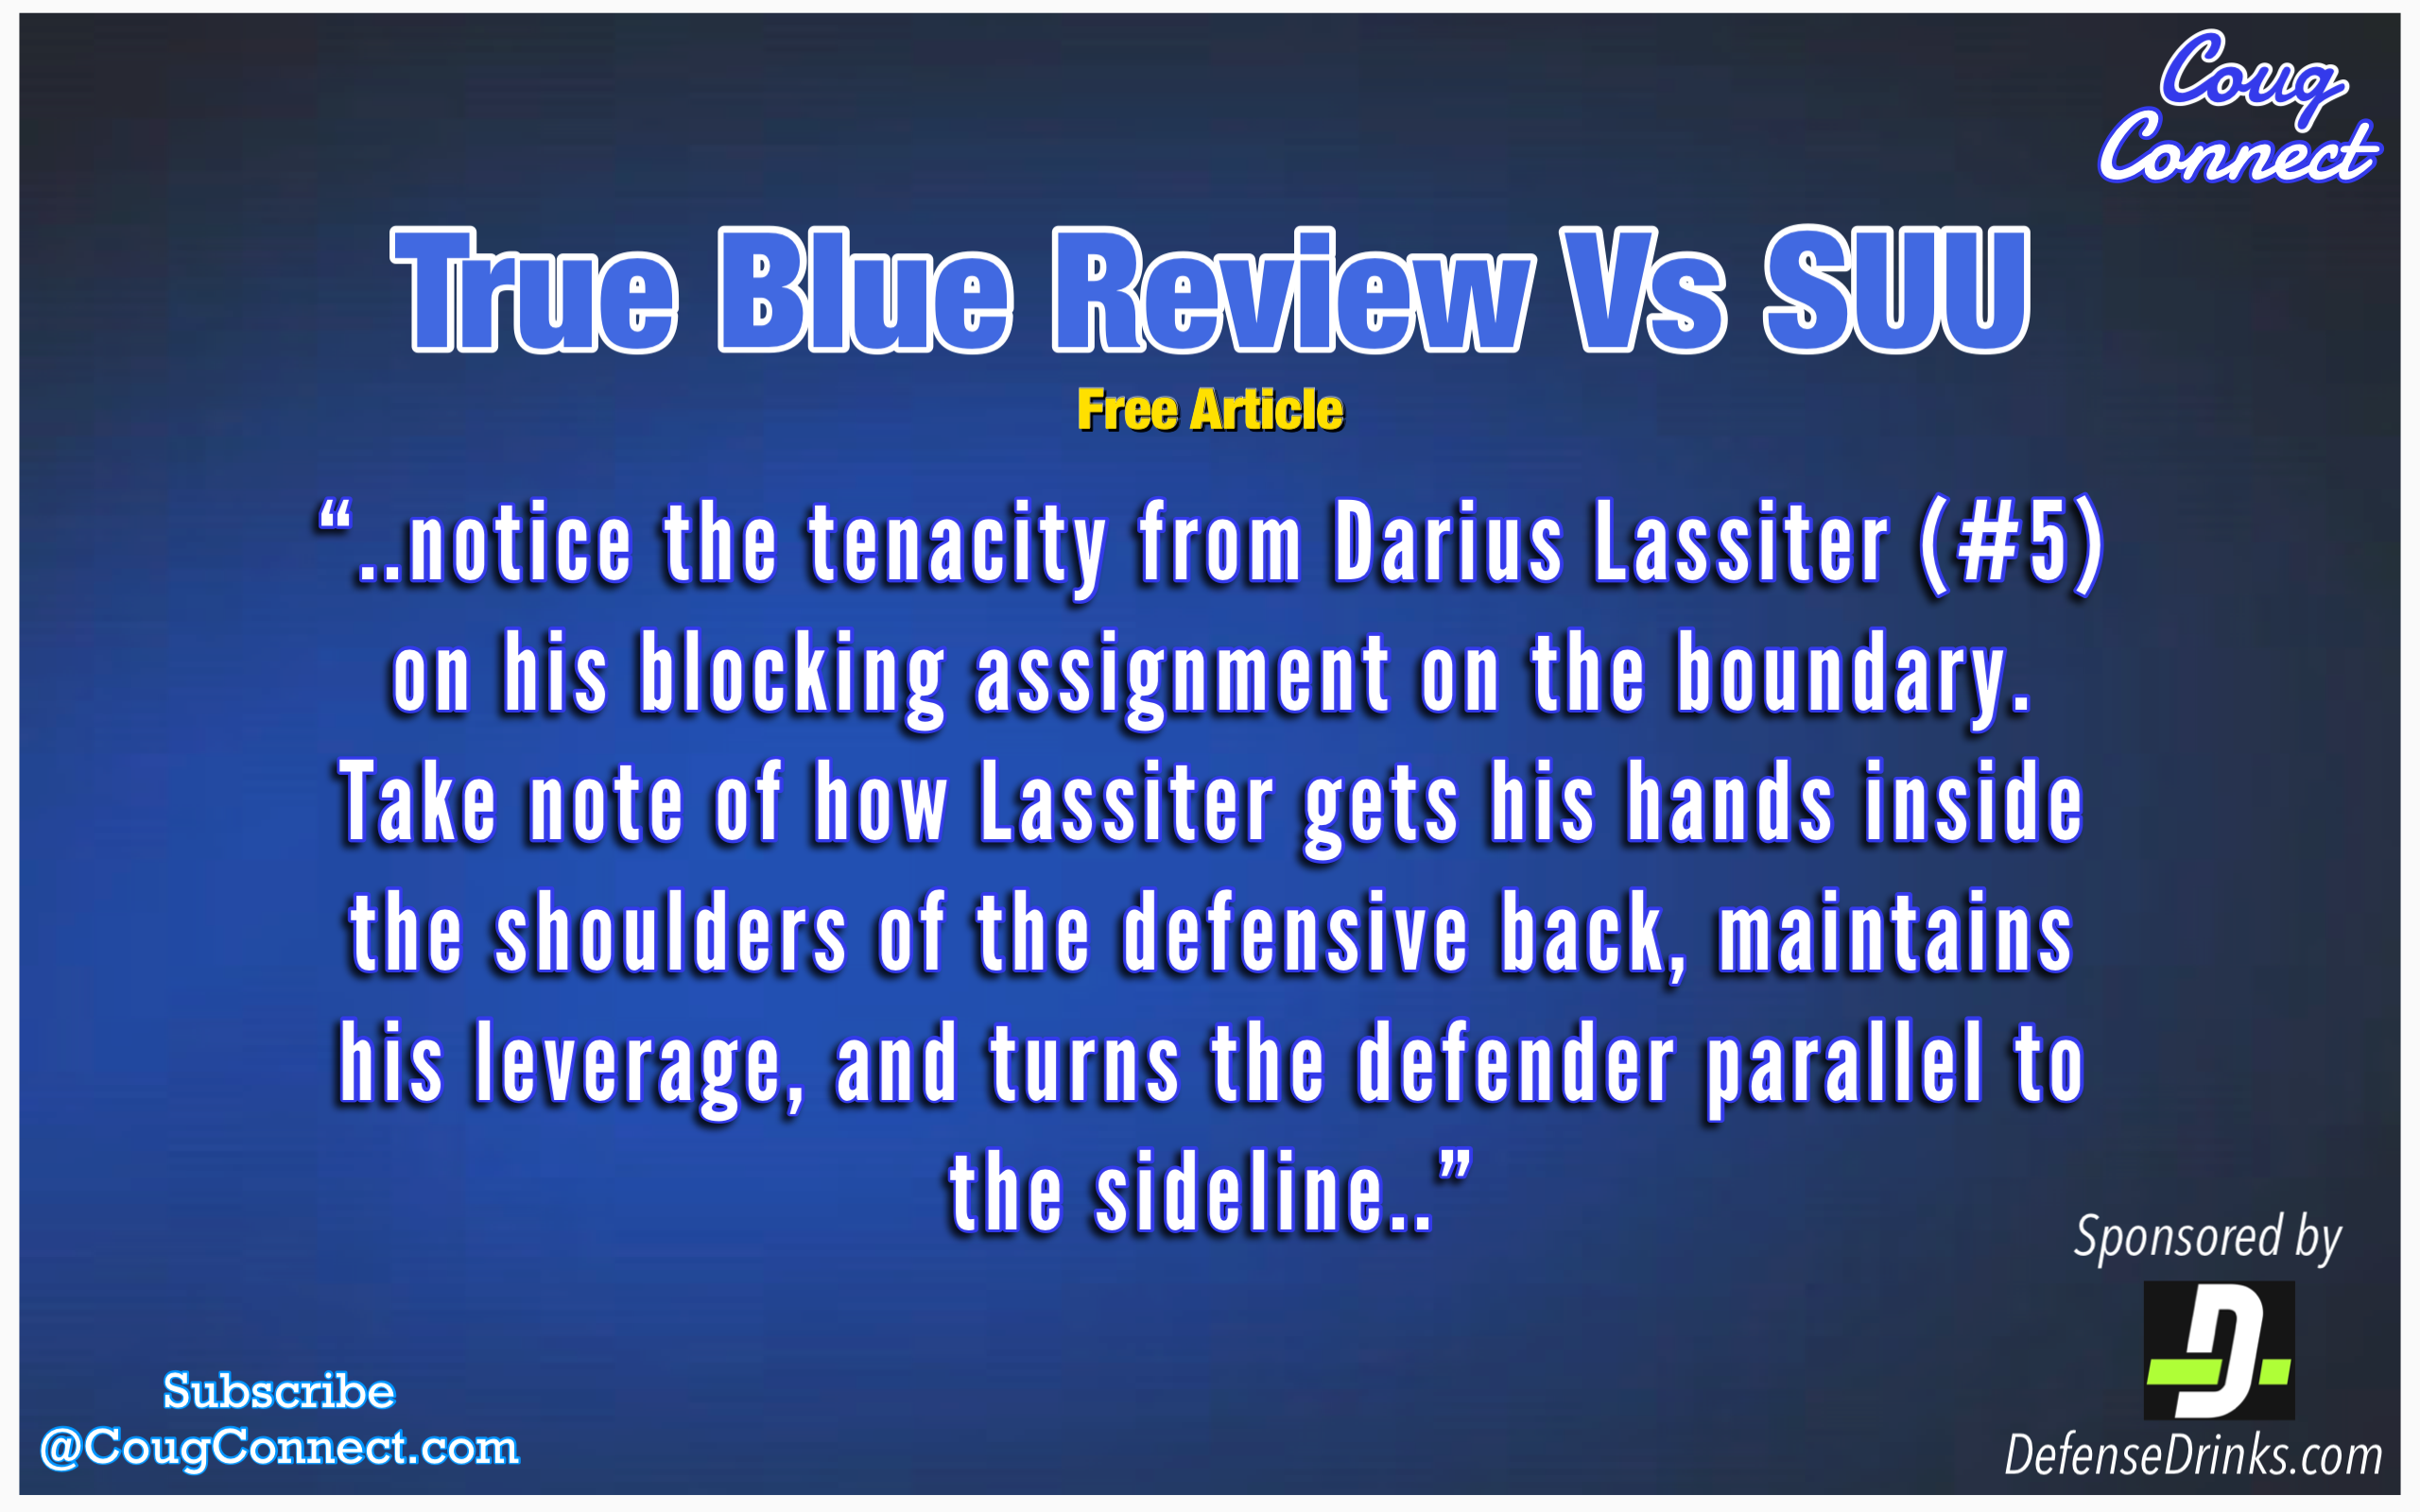 True Blue Review vs SUU